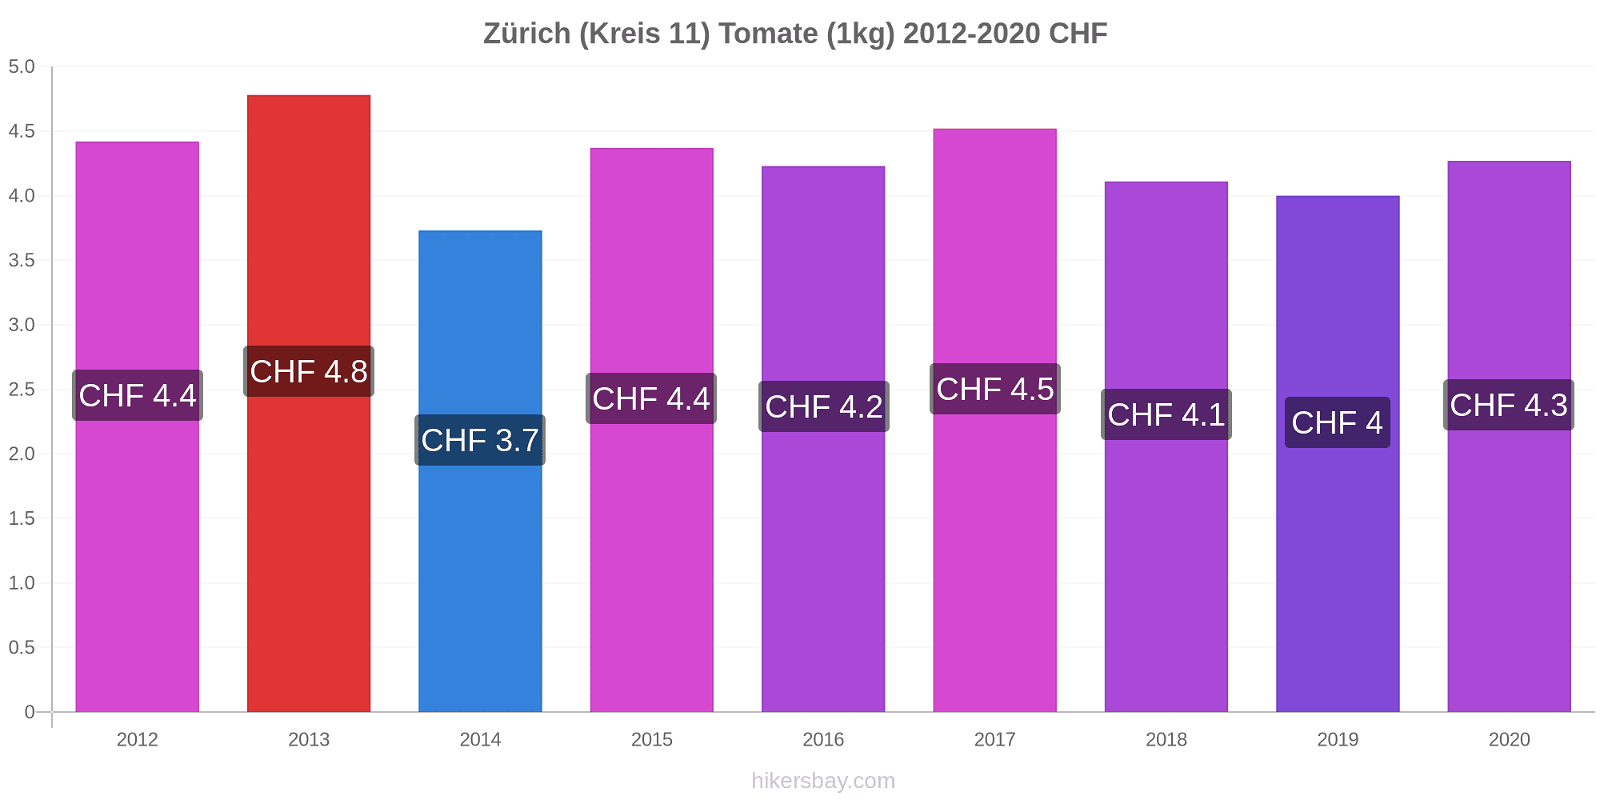 Zürich (Kreis 11) changements de prix Tomate (1kg) hikersbay.com